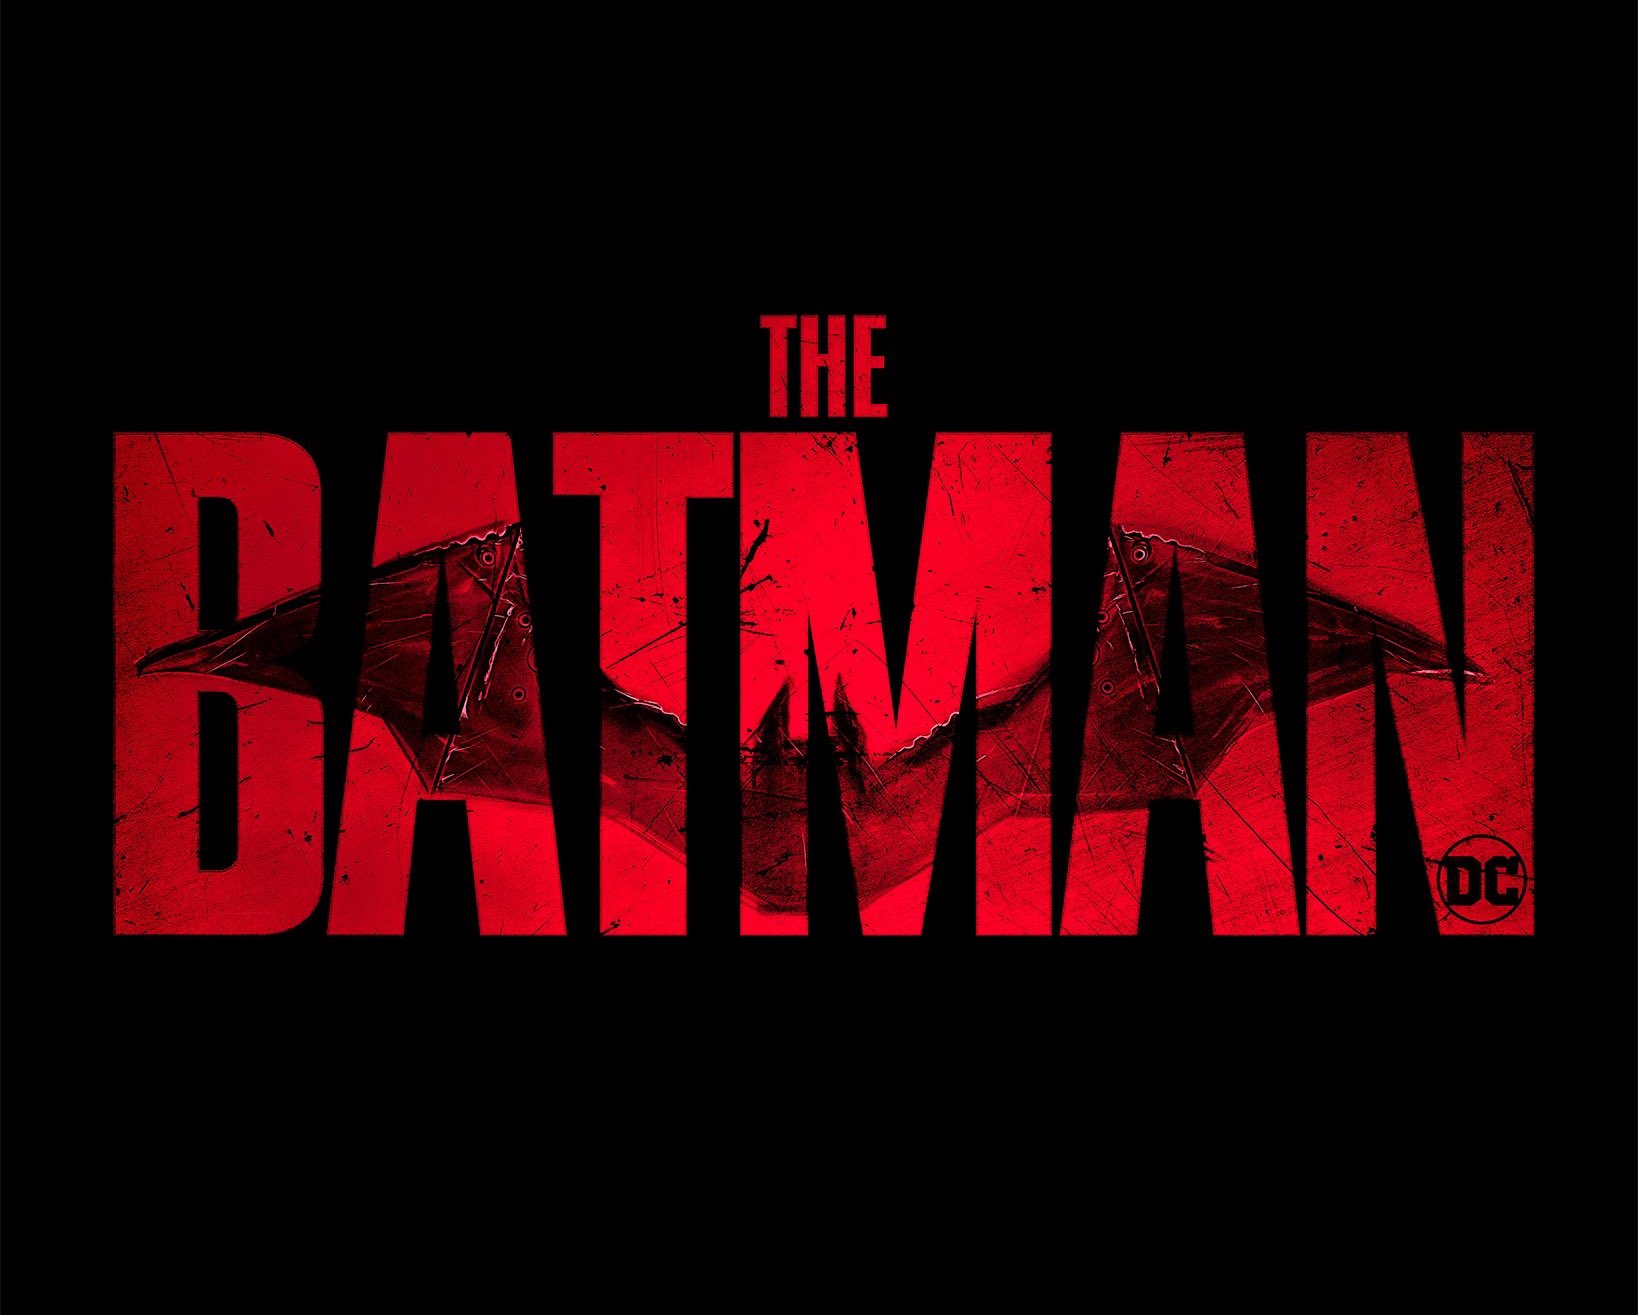 Jim Lee 'The Batman' art and movie logo revealed by director Matt Reeves